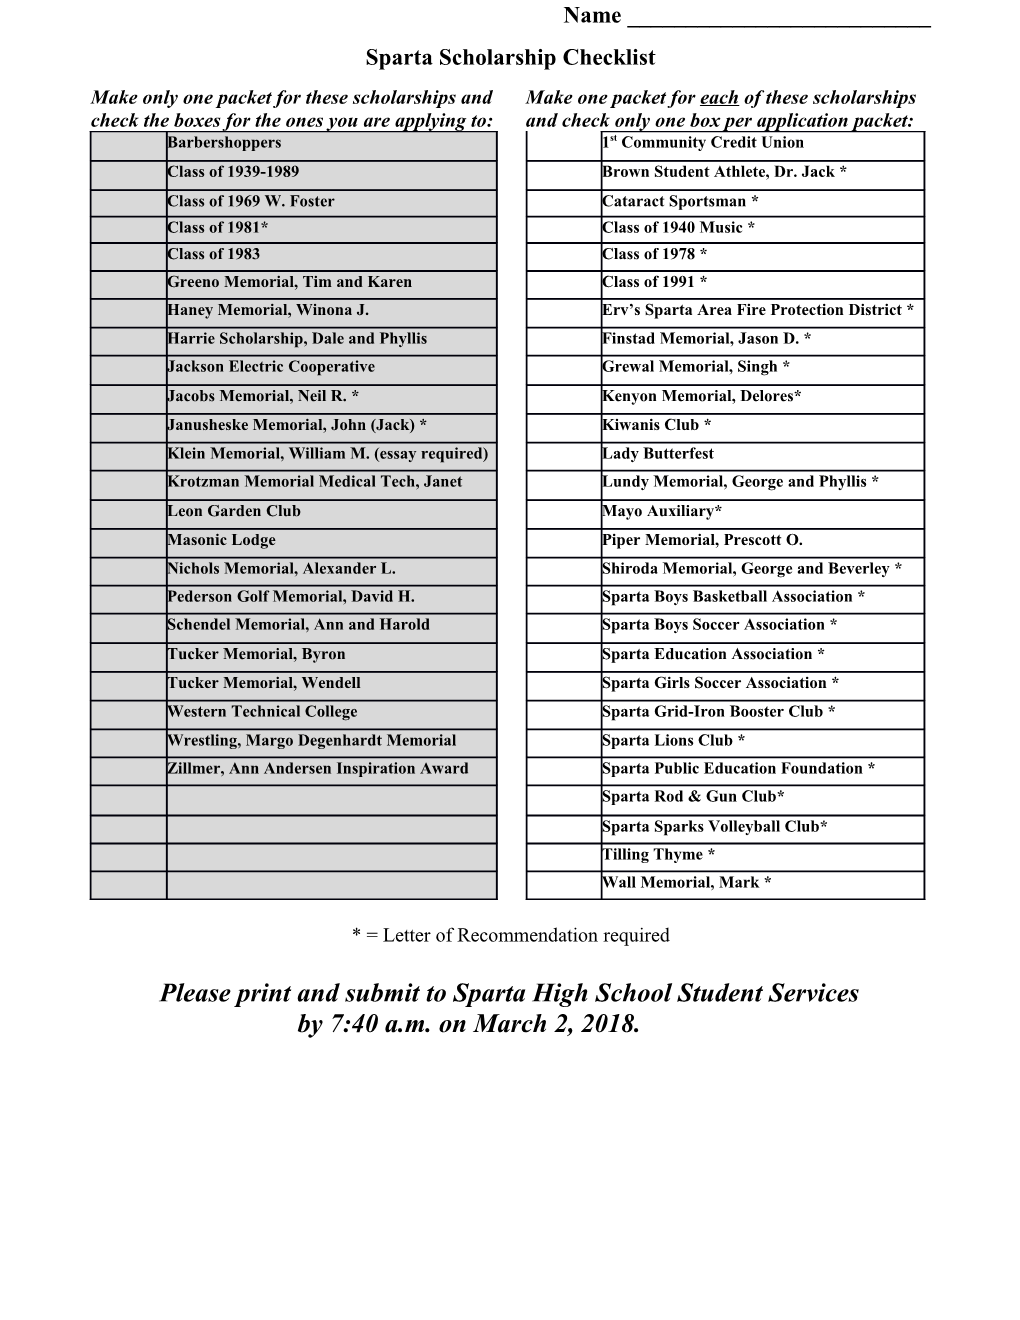 Sparta Scholarship Checklist